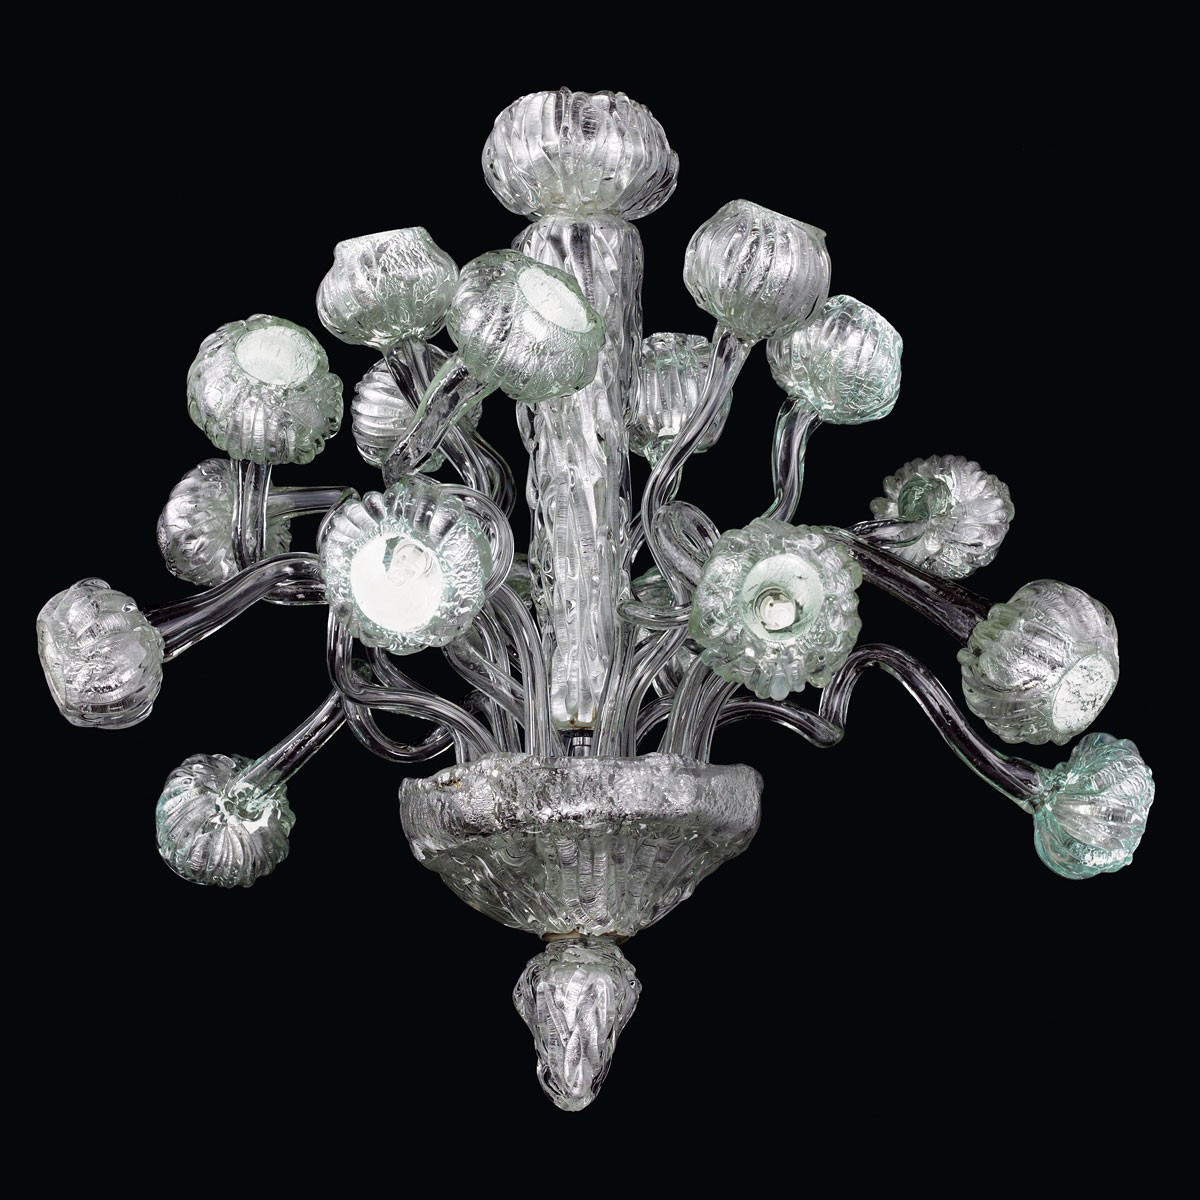 "Mizar" Murano glass chandelier - 18 lights